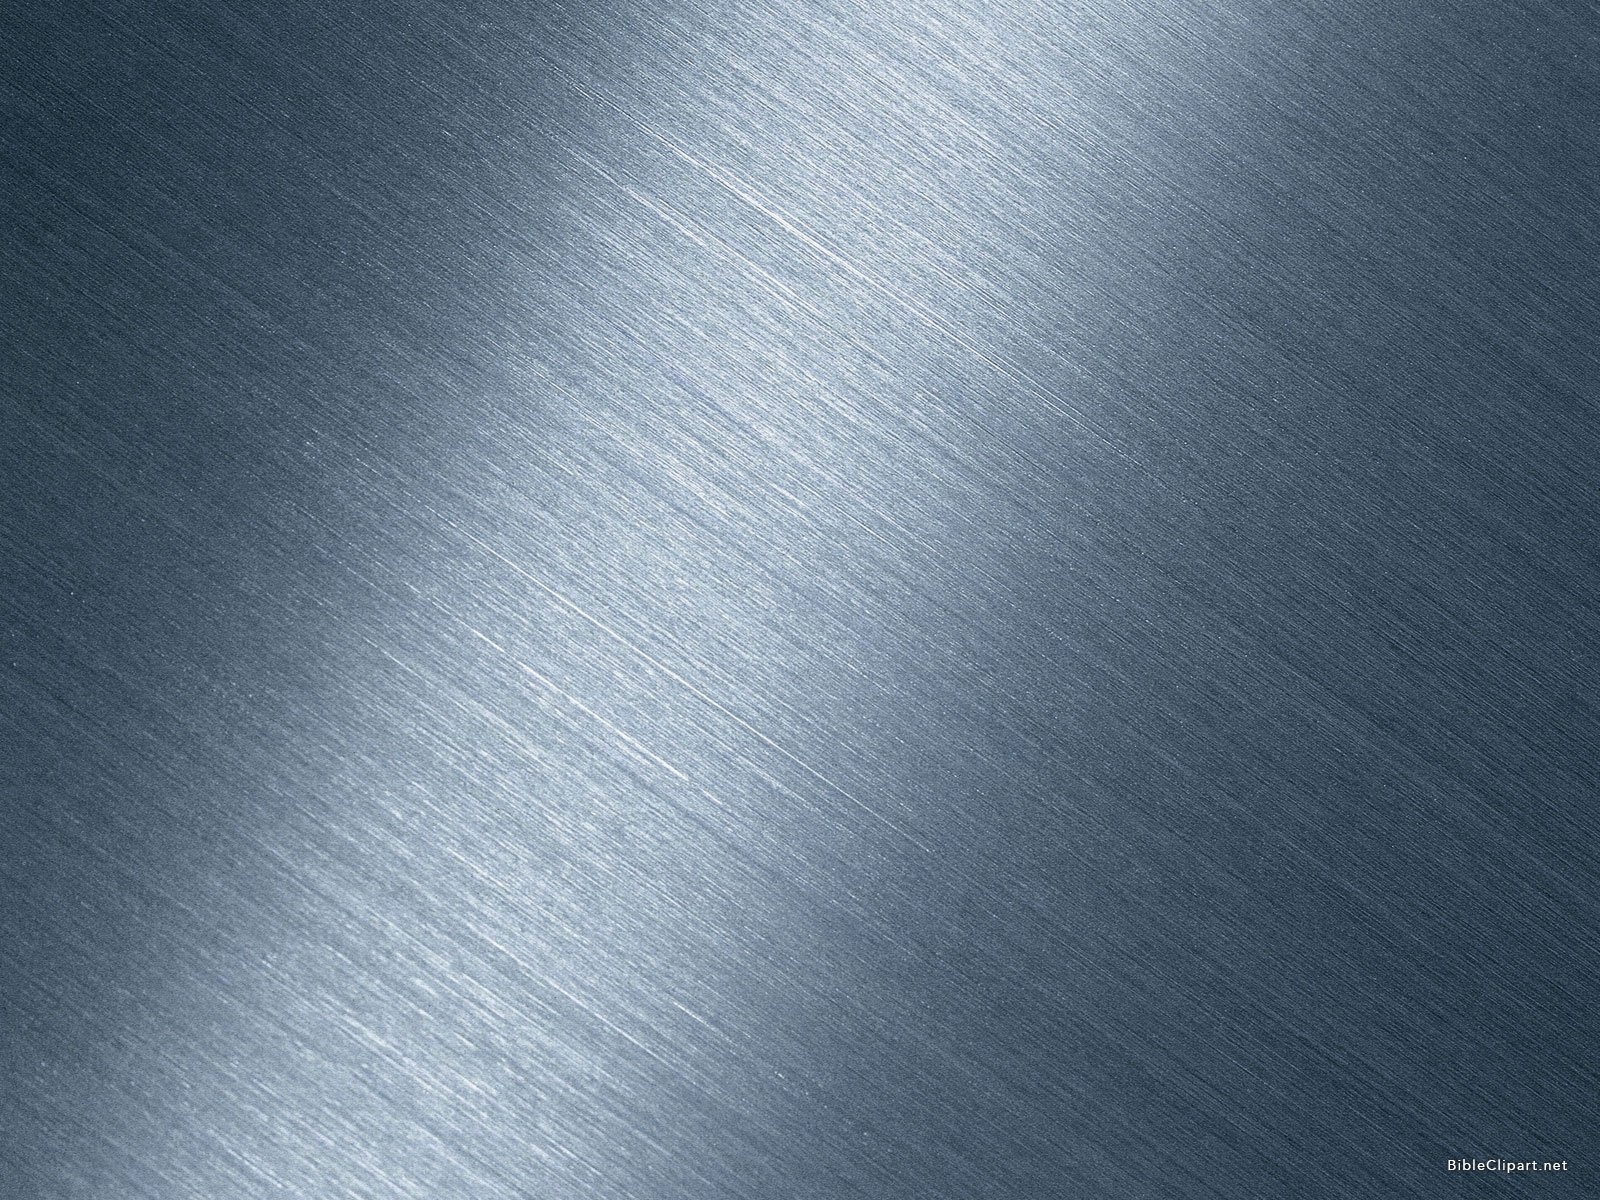 Цвет синий алюминий. Композит царапанный алюминий. Цвет серый (Steel Graphite Metallic). Текстура металла. Металлическая текстура.